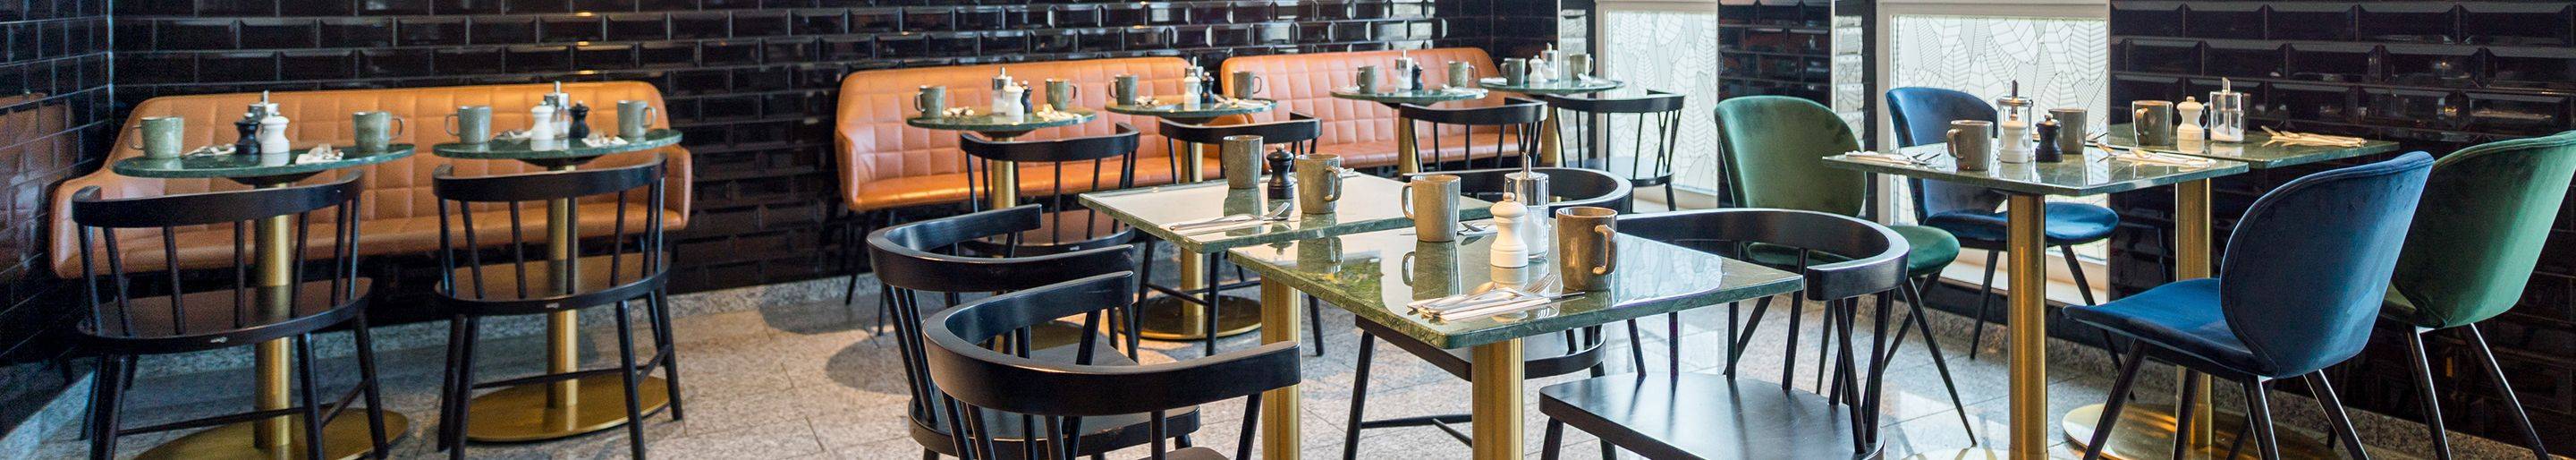 Indoor Café furniture for your hotel or restaurant